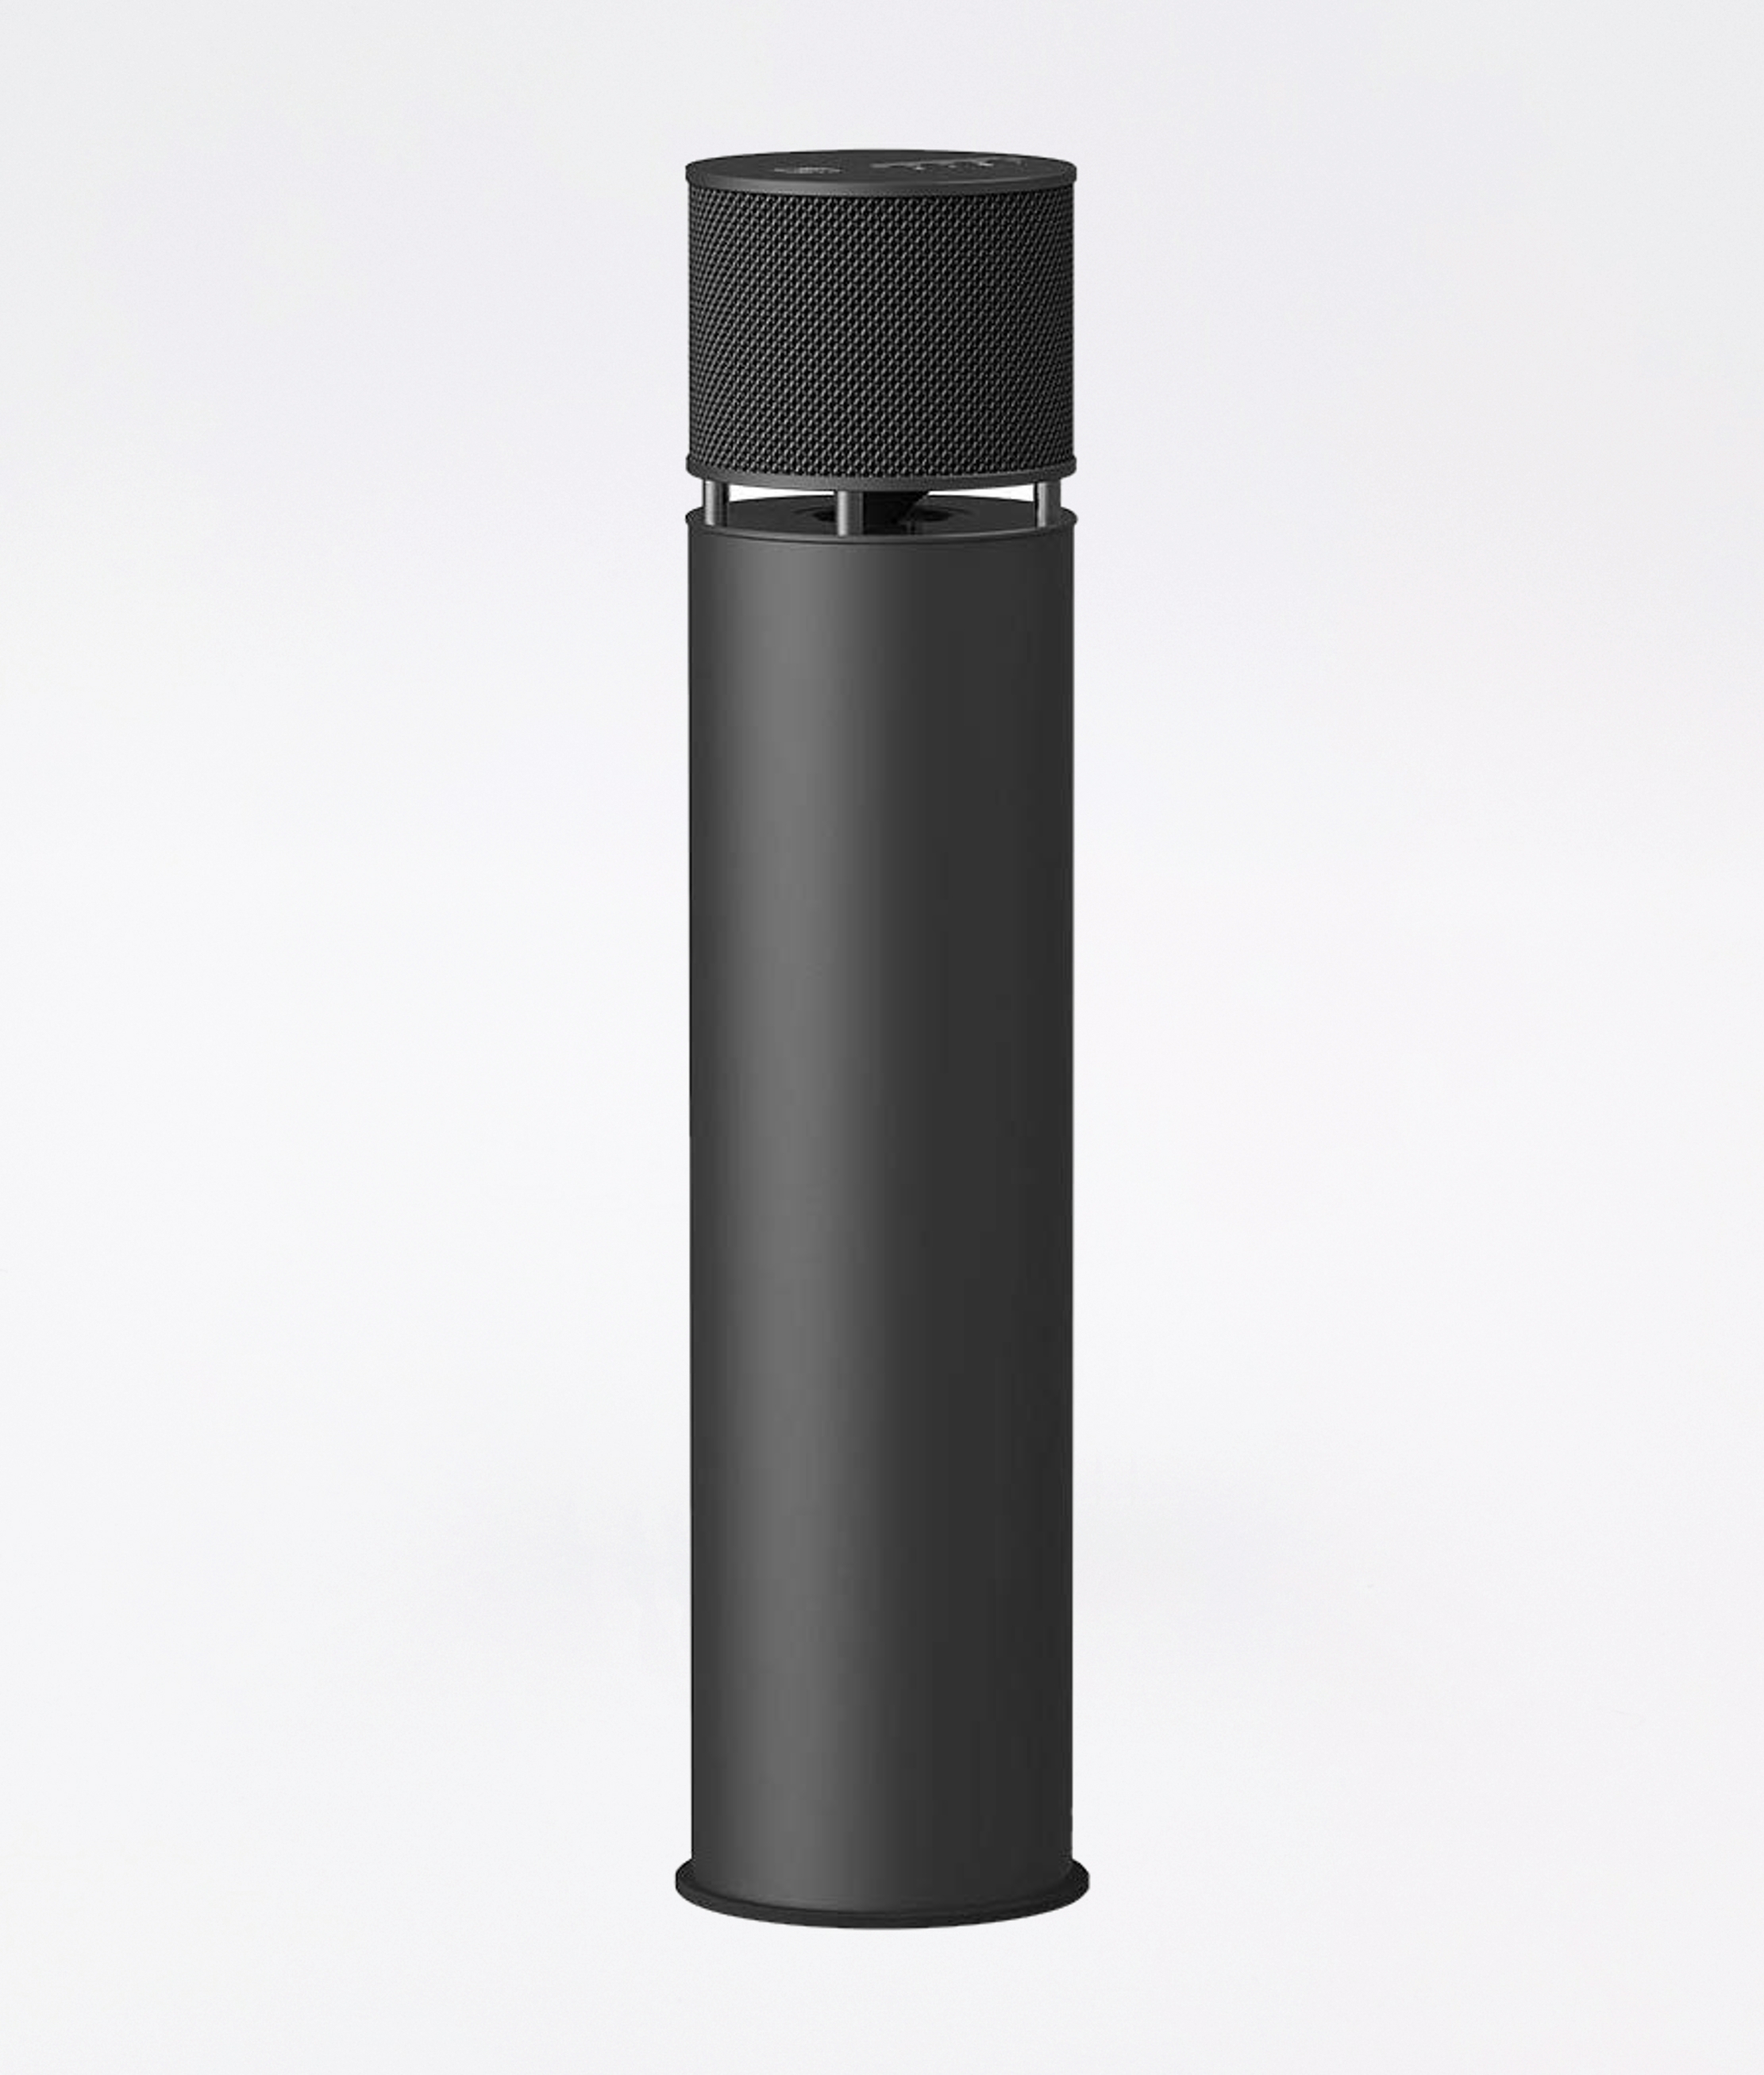 Abramtek E600 Wireless Speaker with Super Bass Subwoofer and 360 Sound